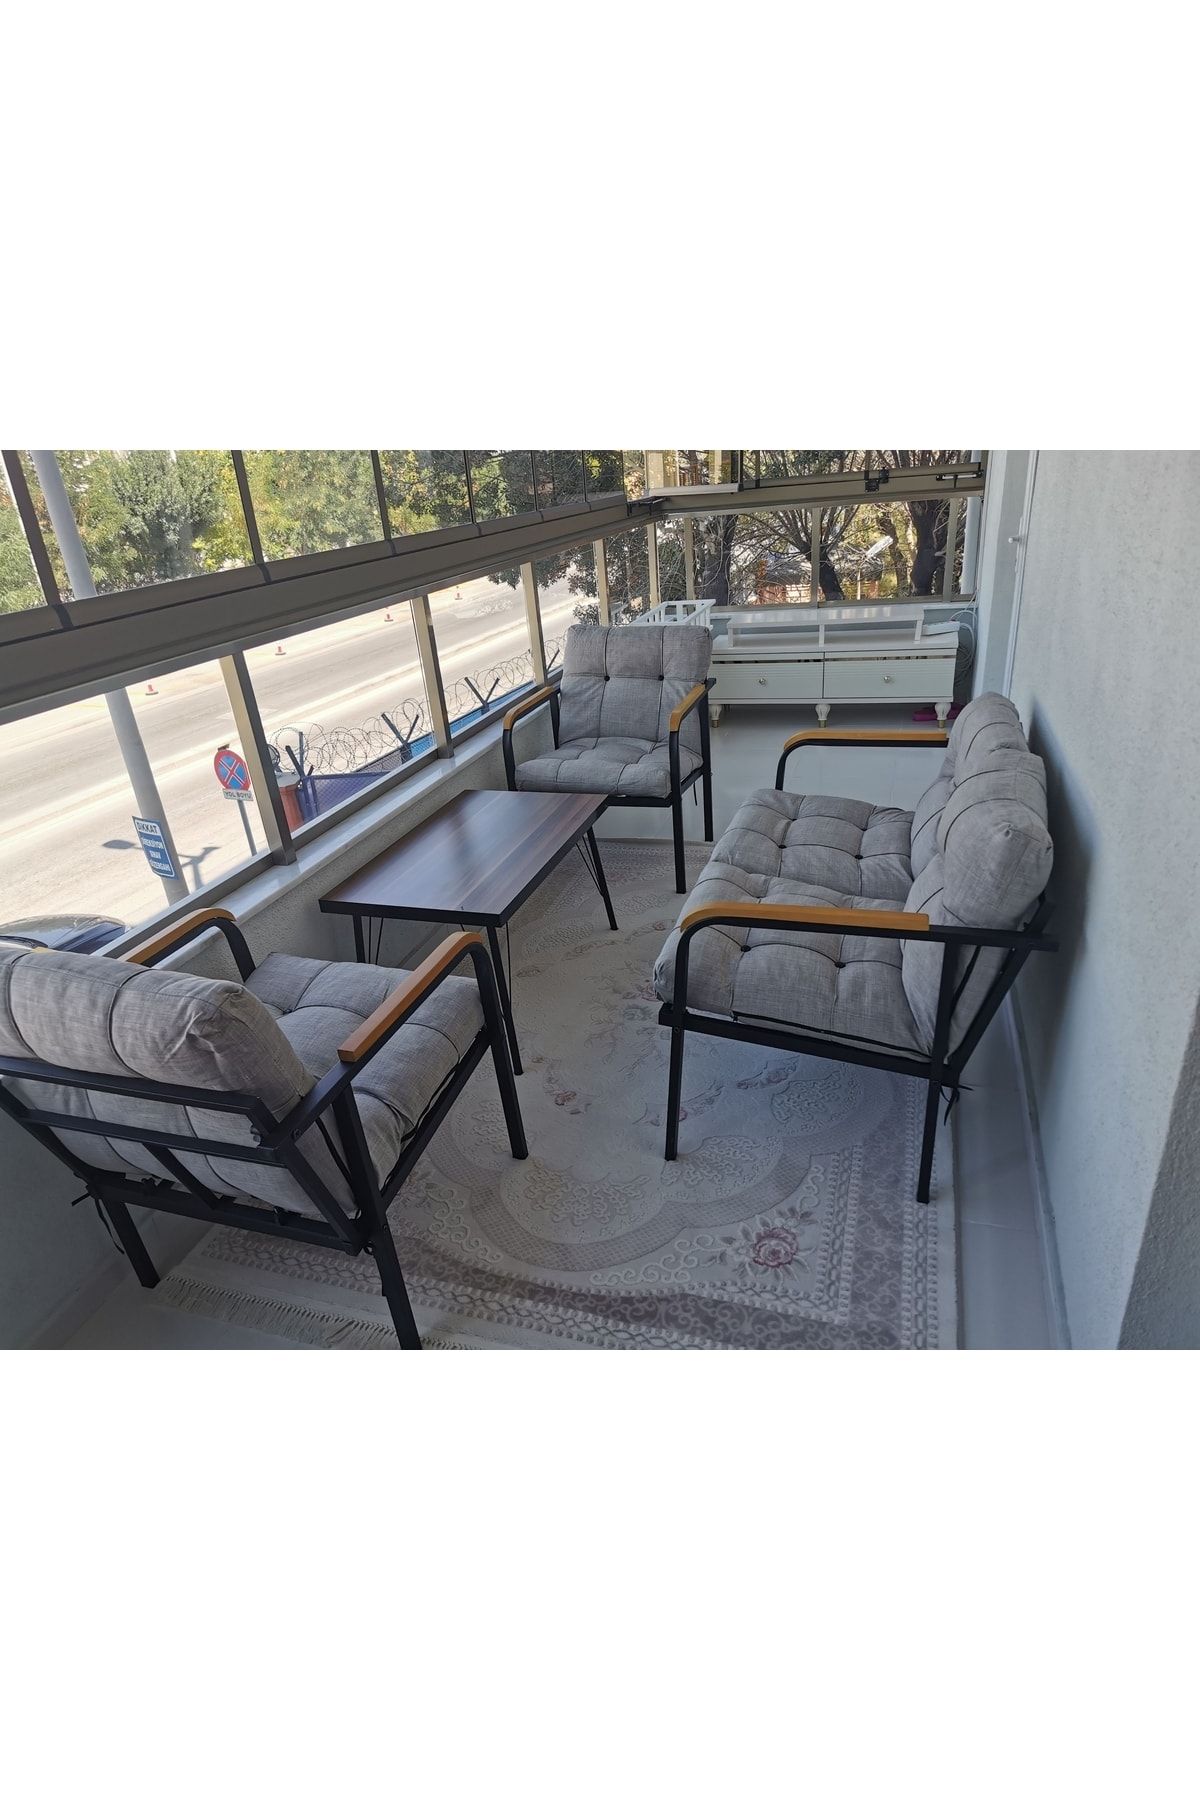 MODERN Mars Balkon, Bahçe, Cafe - Salon - Metal Kanepe Koltuk Takımı - 2+1+1 + Sehpa